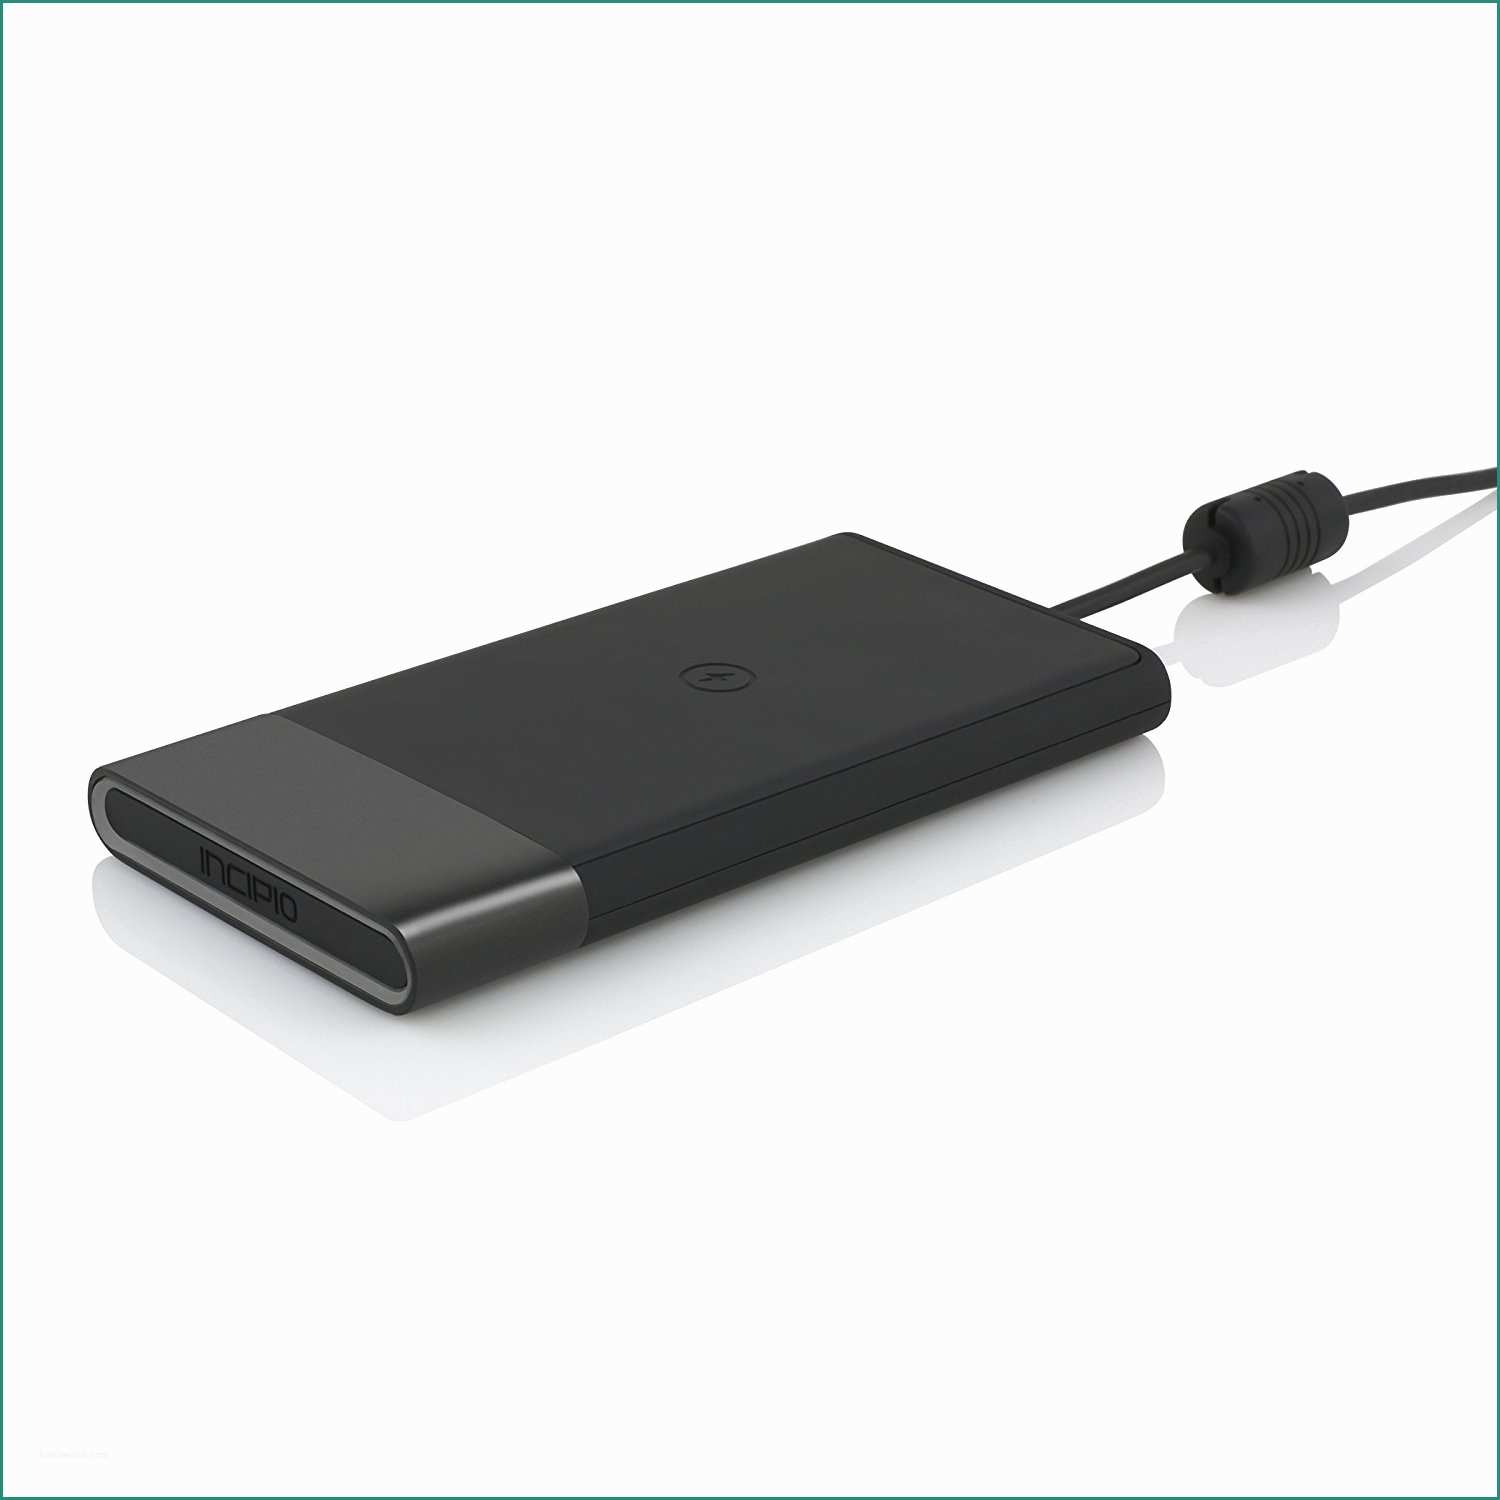 Piastra A Induzione Lidl E I Migliori Caricabatterie Wireless Per Caricare L iPhone 8 Spendendo